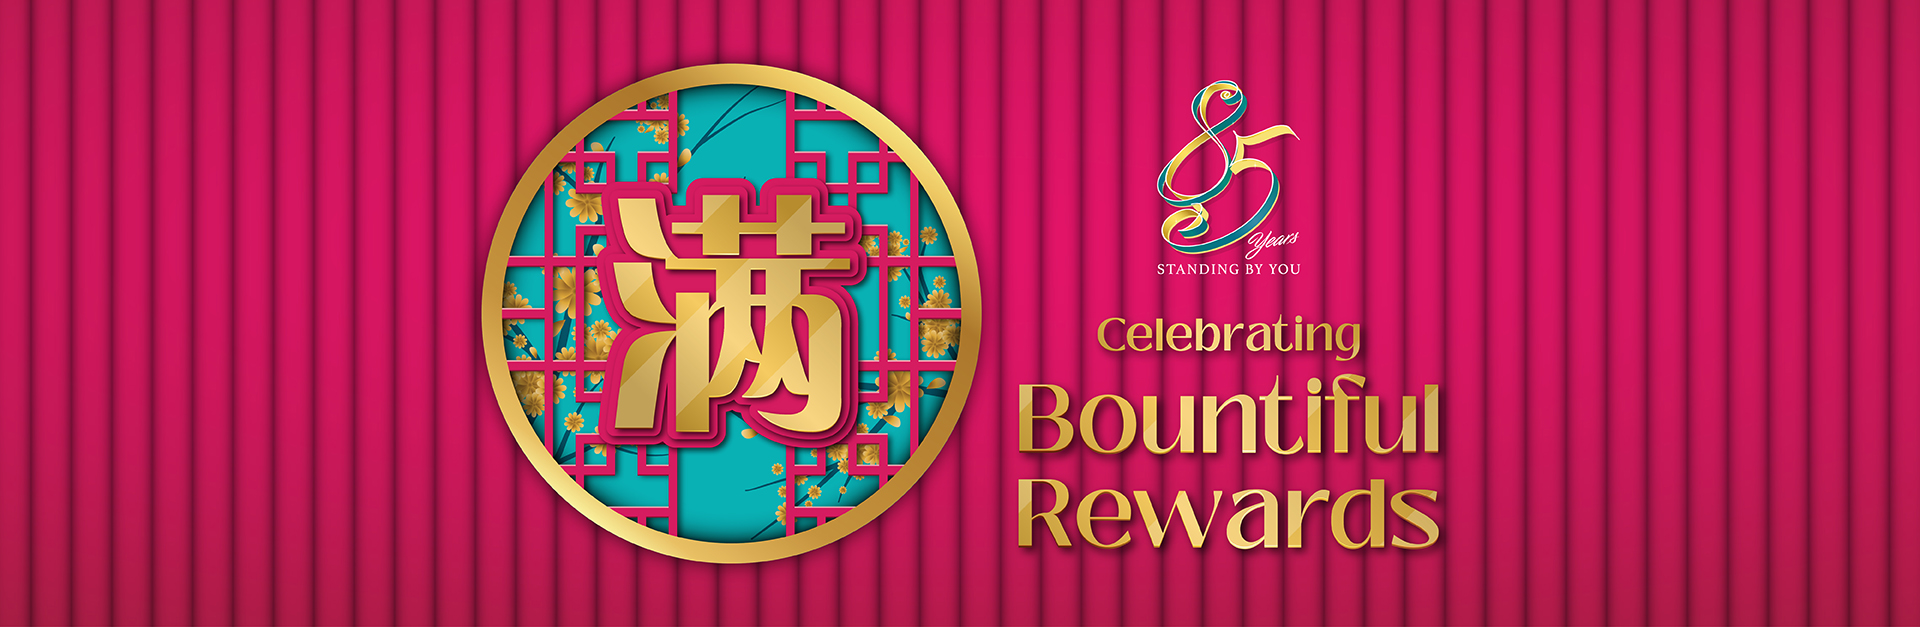 Celebrating Bountiful Rewards